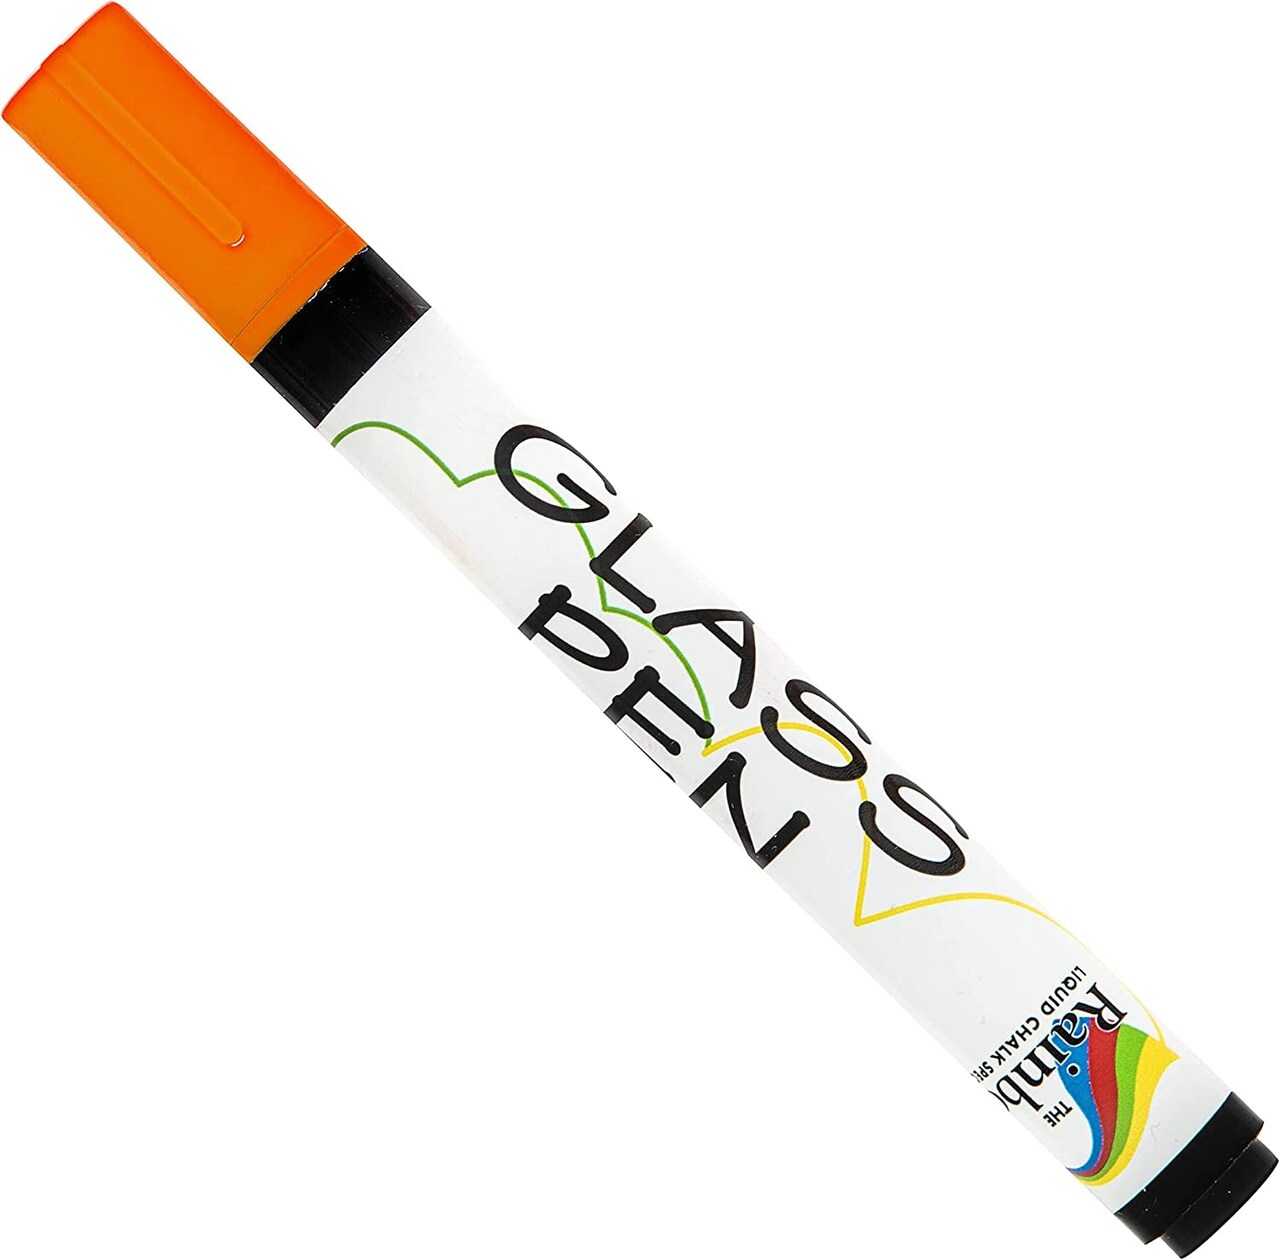 Glass Pen Window Marker: Liquid Chalk Markers for Glass, Car